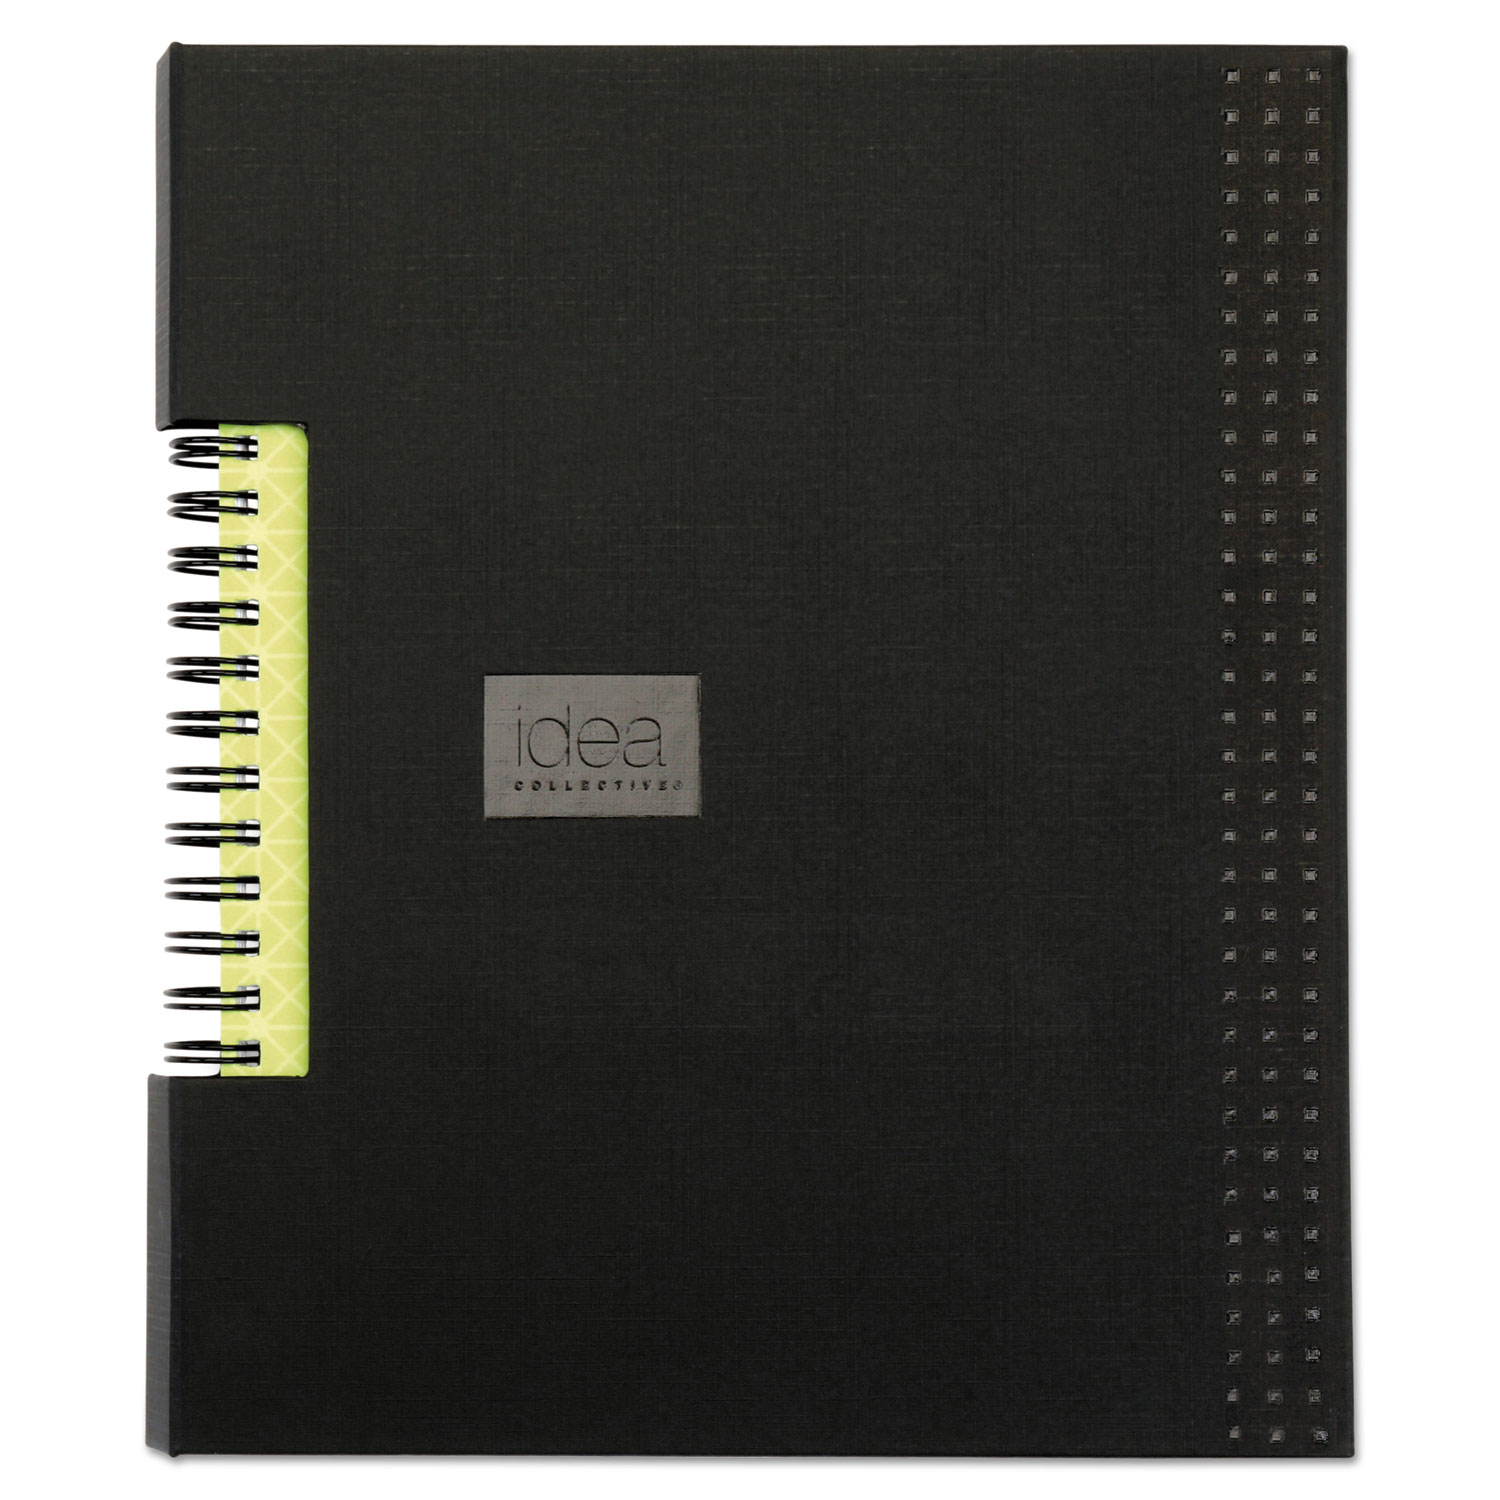 Idea Collective Professional Wirebound Hardcover Notebook, 8 1/4 x 5 7/8, Black